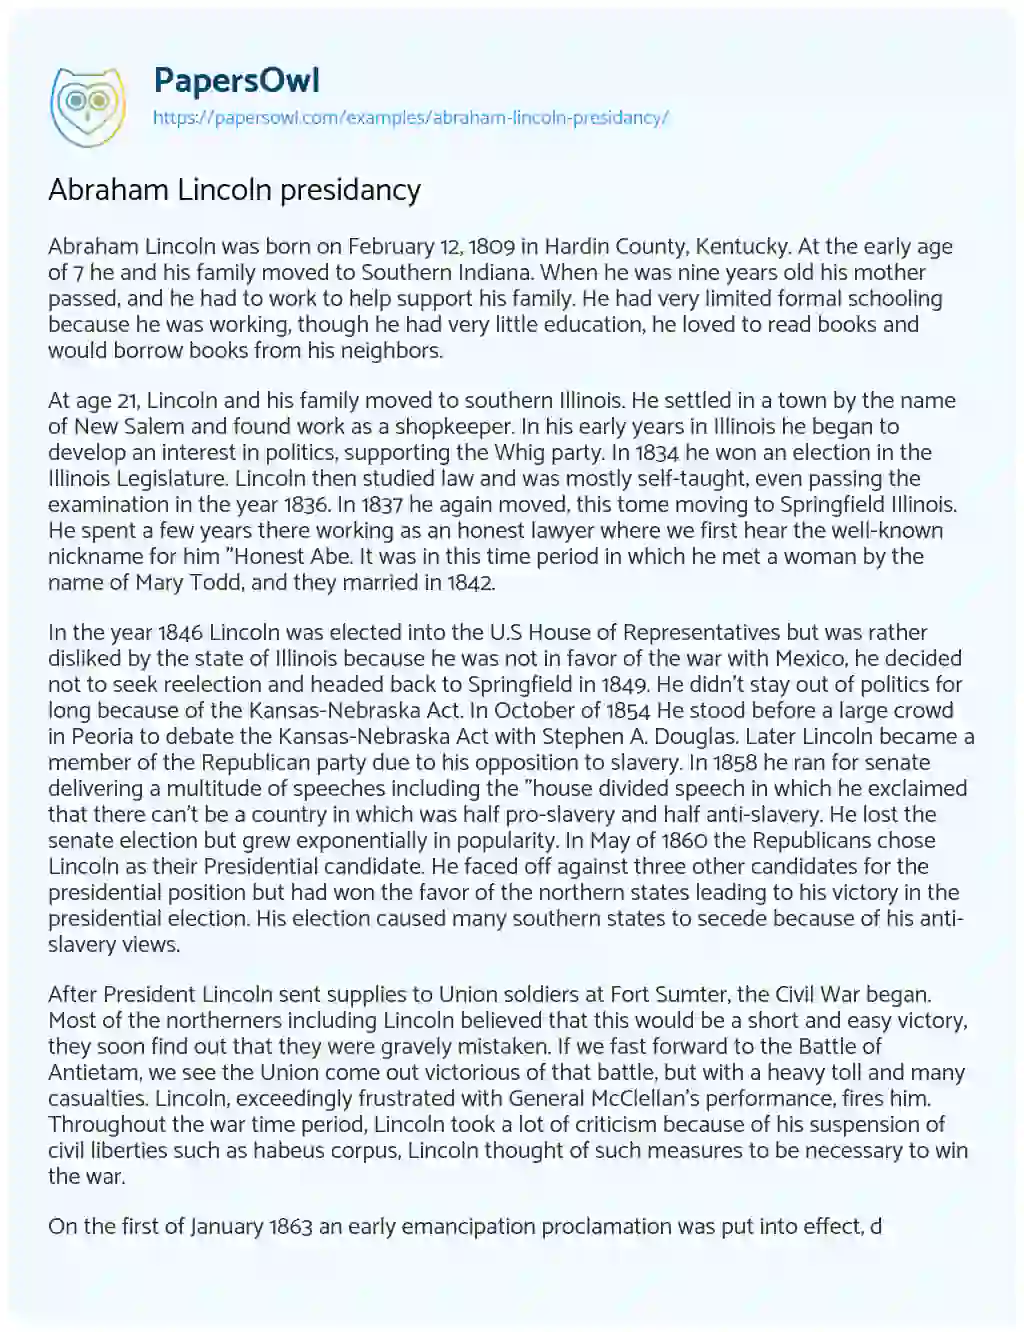 Essay on Abraham Lincoln Presidancy